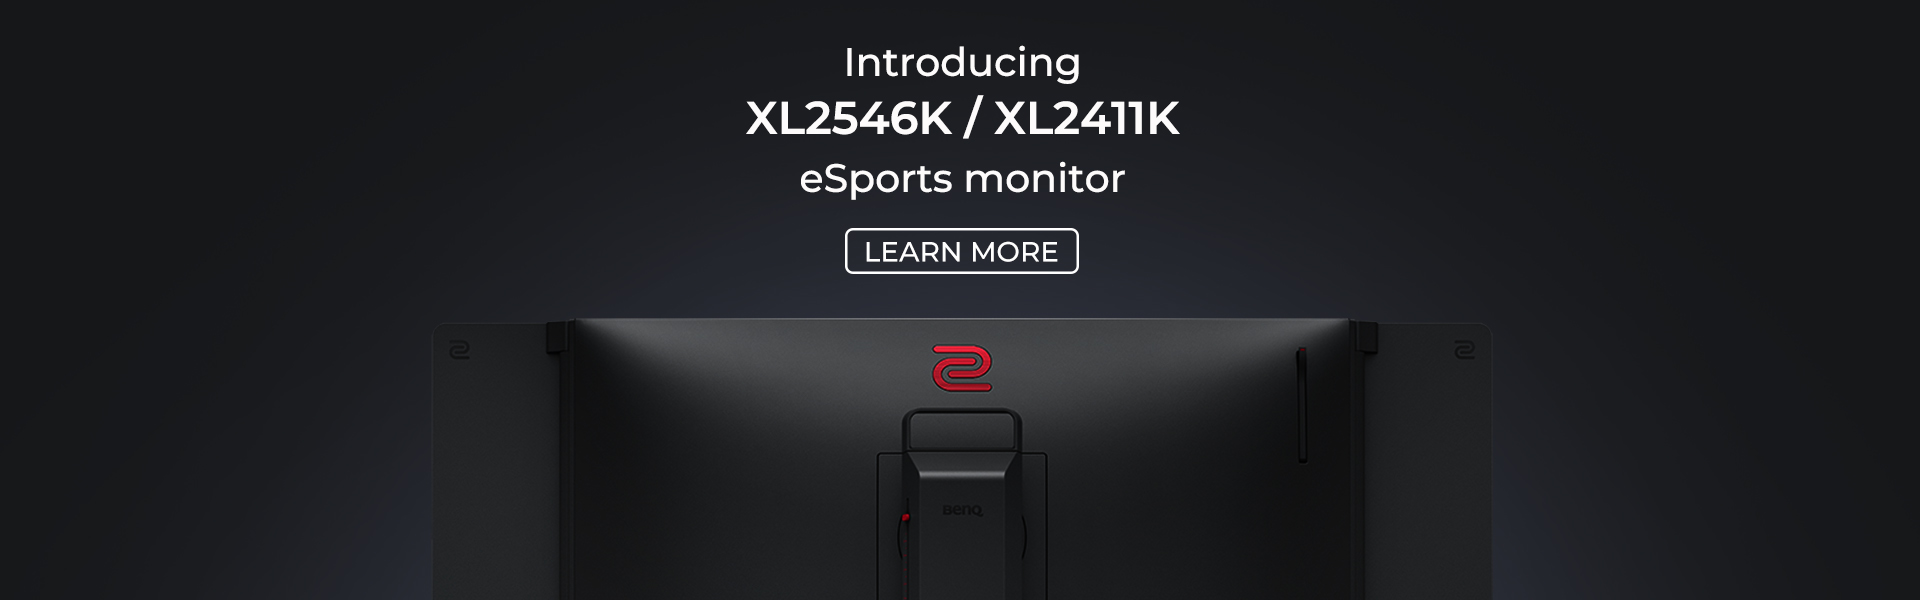 xl-k gaming monitor series